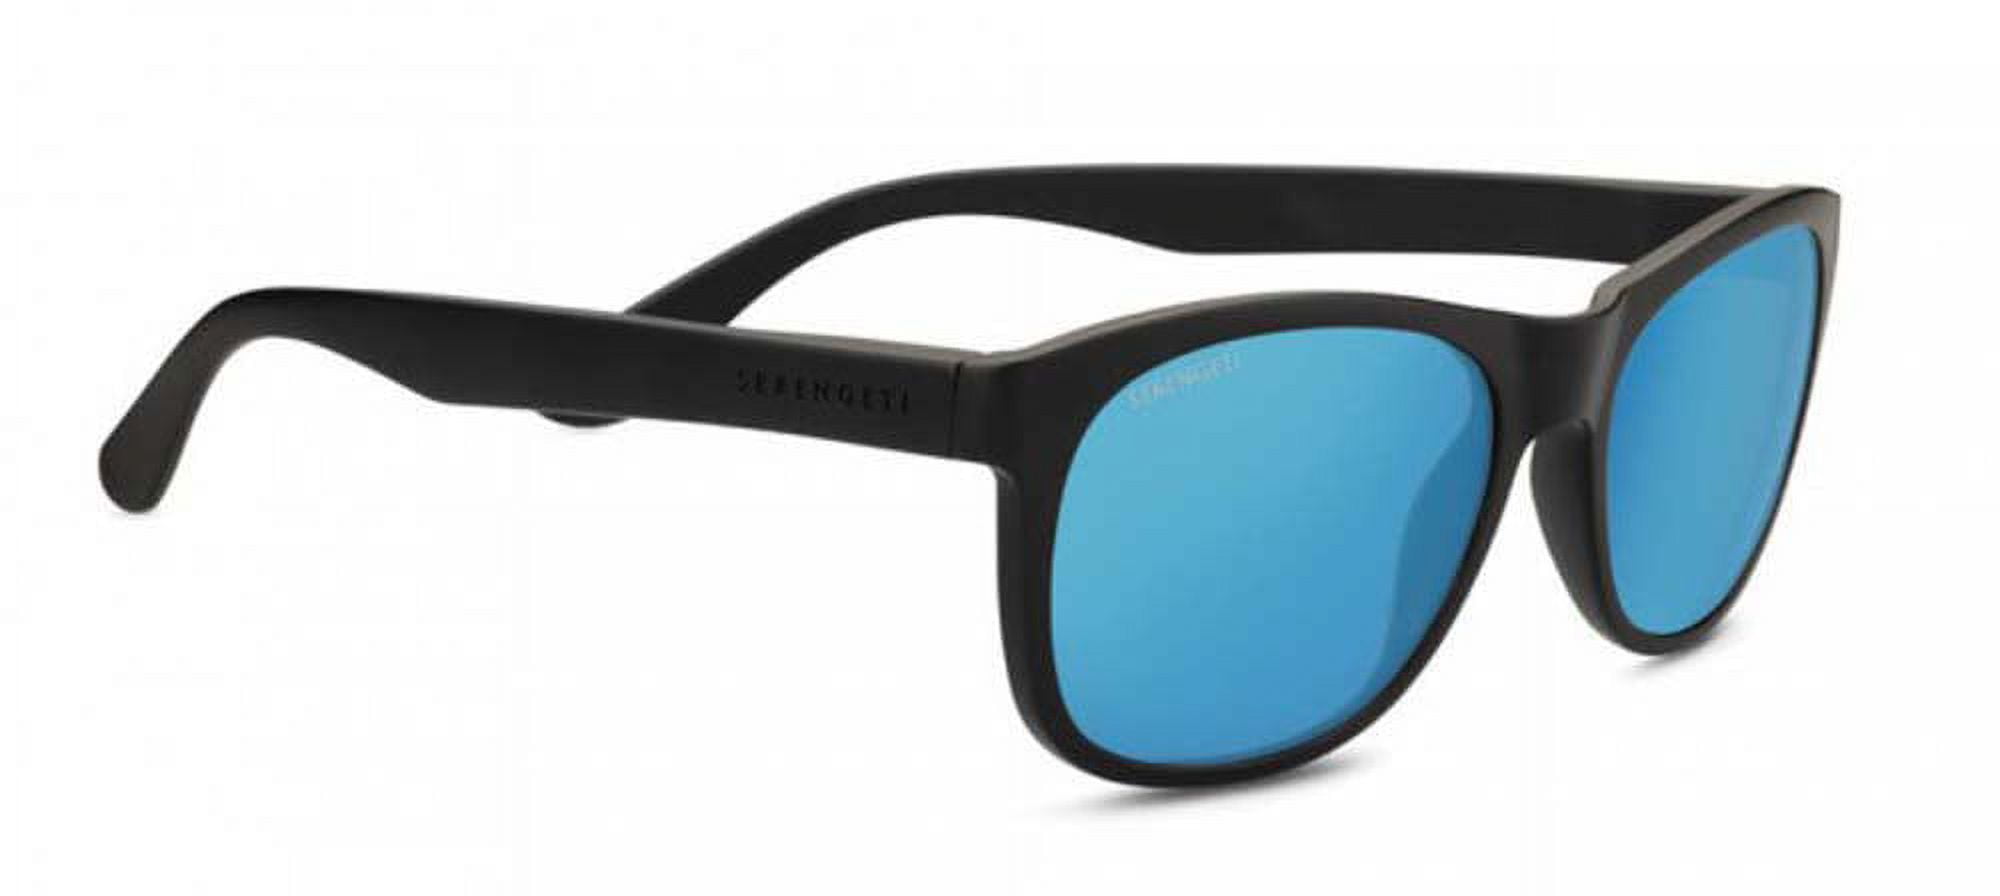 Sunglasses Anteo 8668 Satin Black Polarized 555nm Blue Lens - Walmart.com